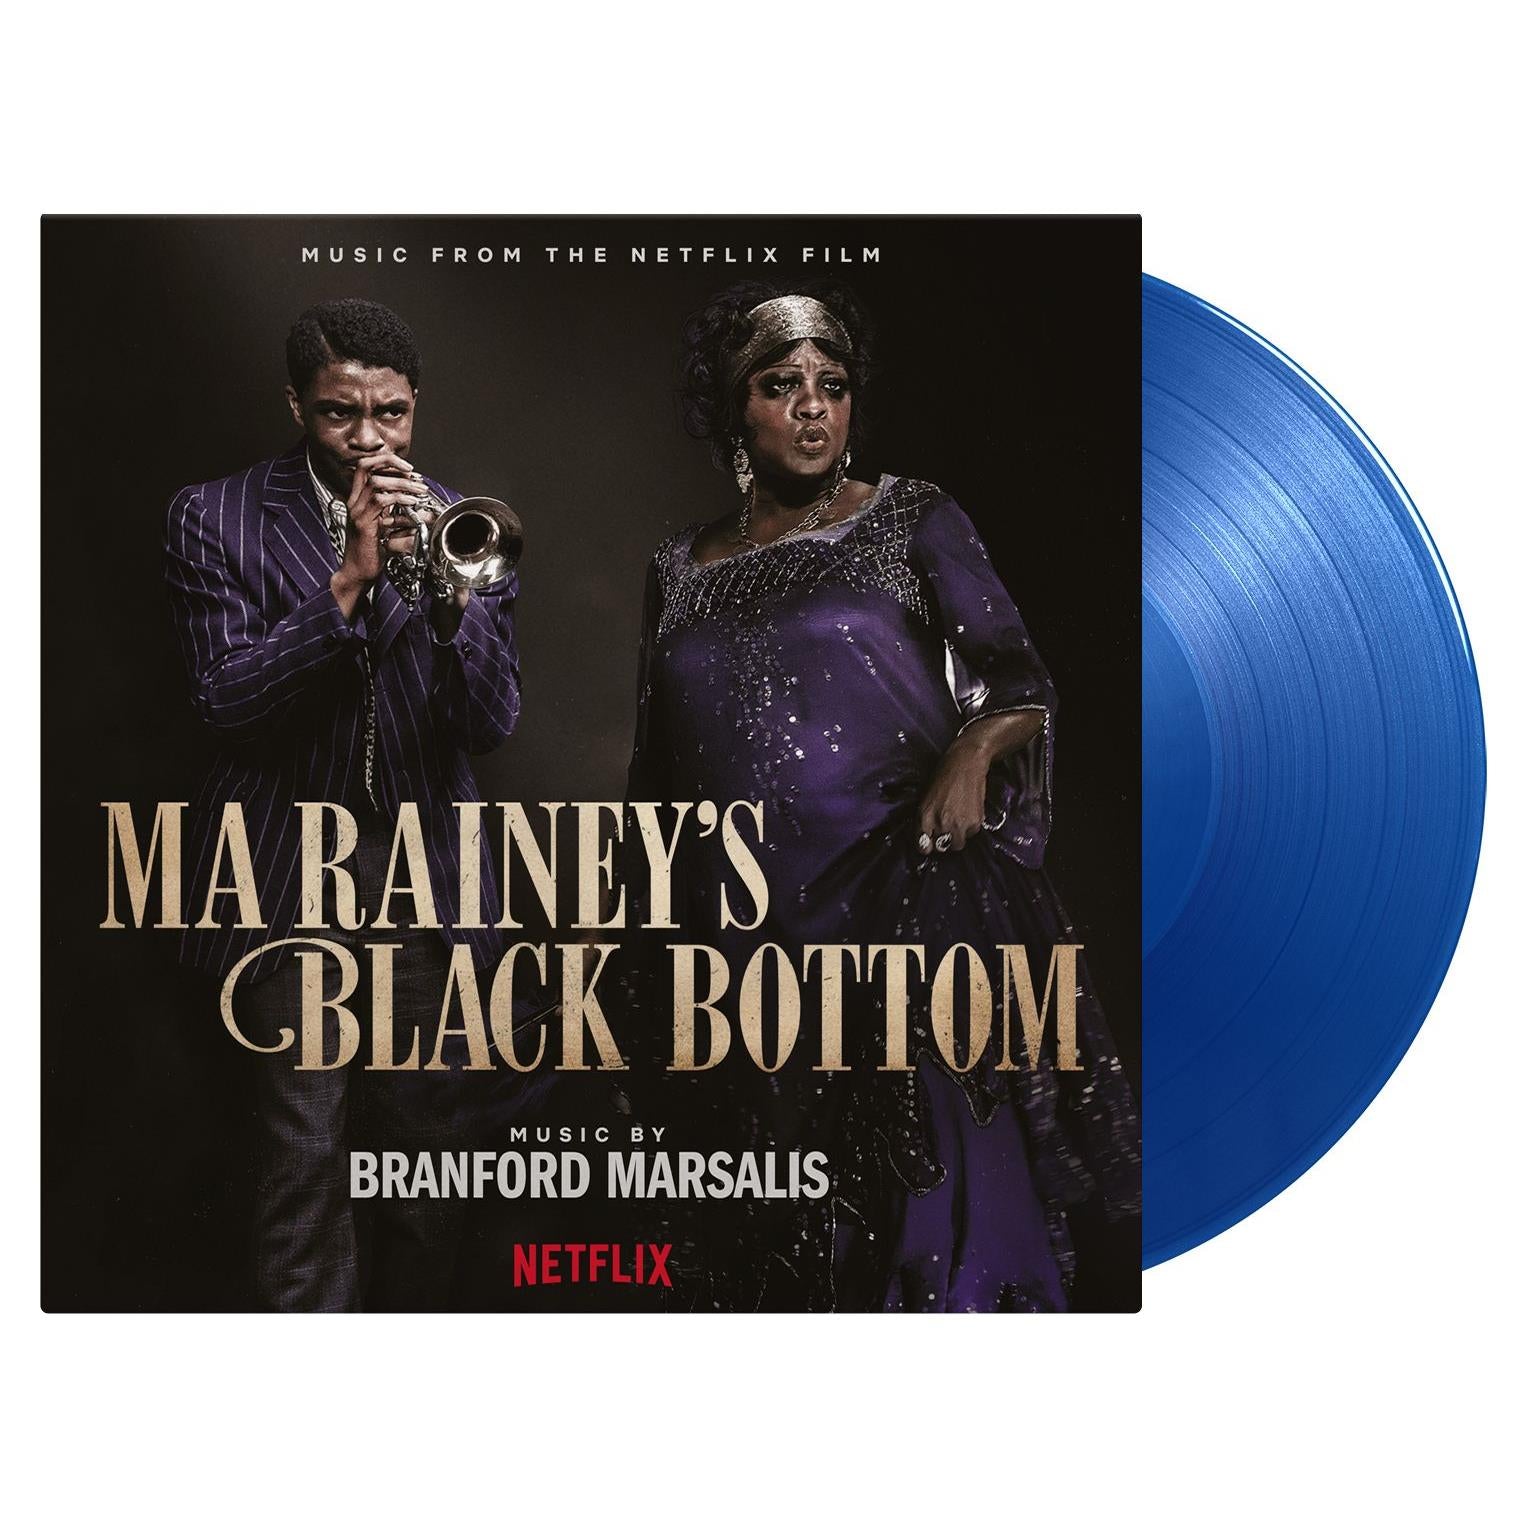 ma rainey’s black bottom (original soundtrack) (limited transparent blue vinyl) (online only)